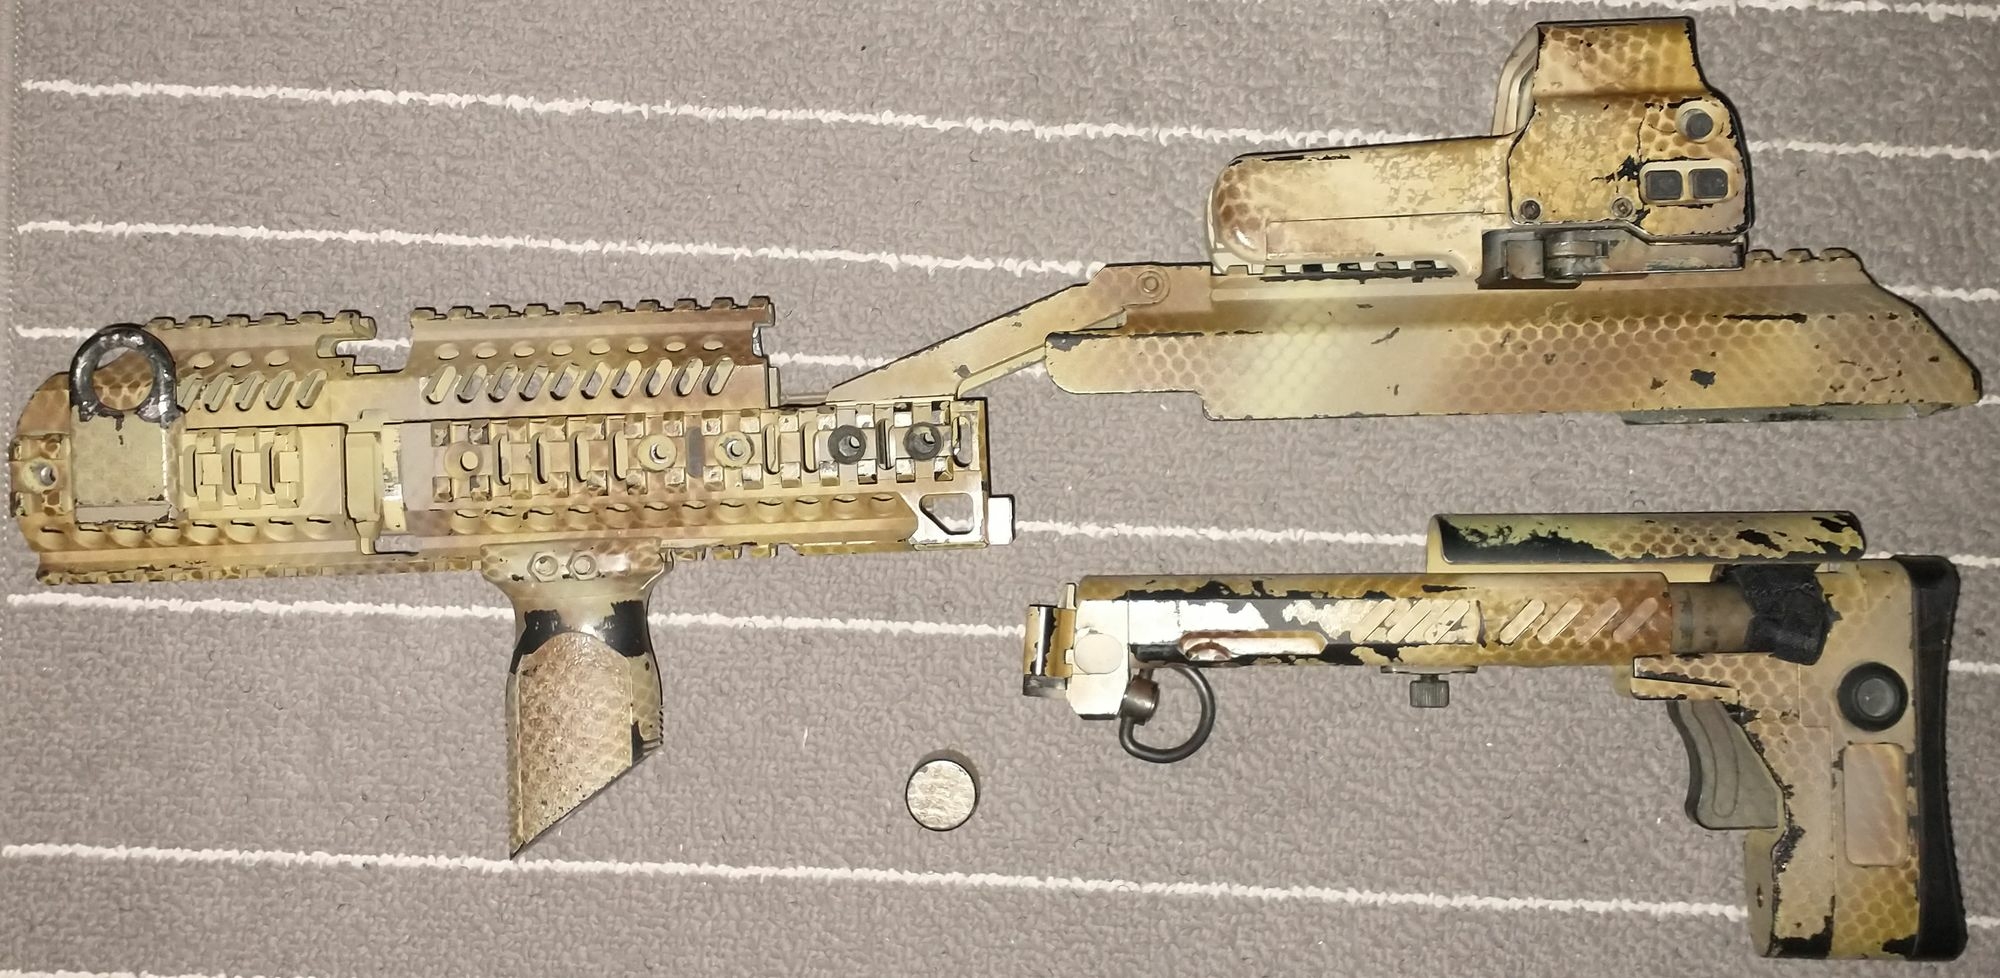 Panneau modulaire triple chargeur HK416/AK covert